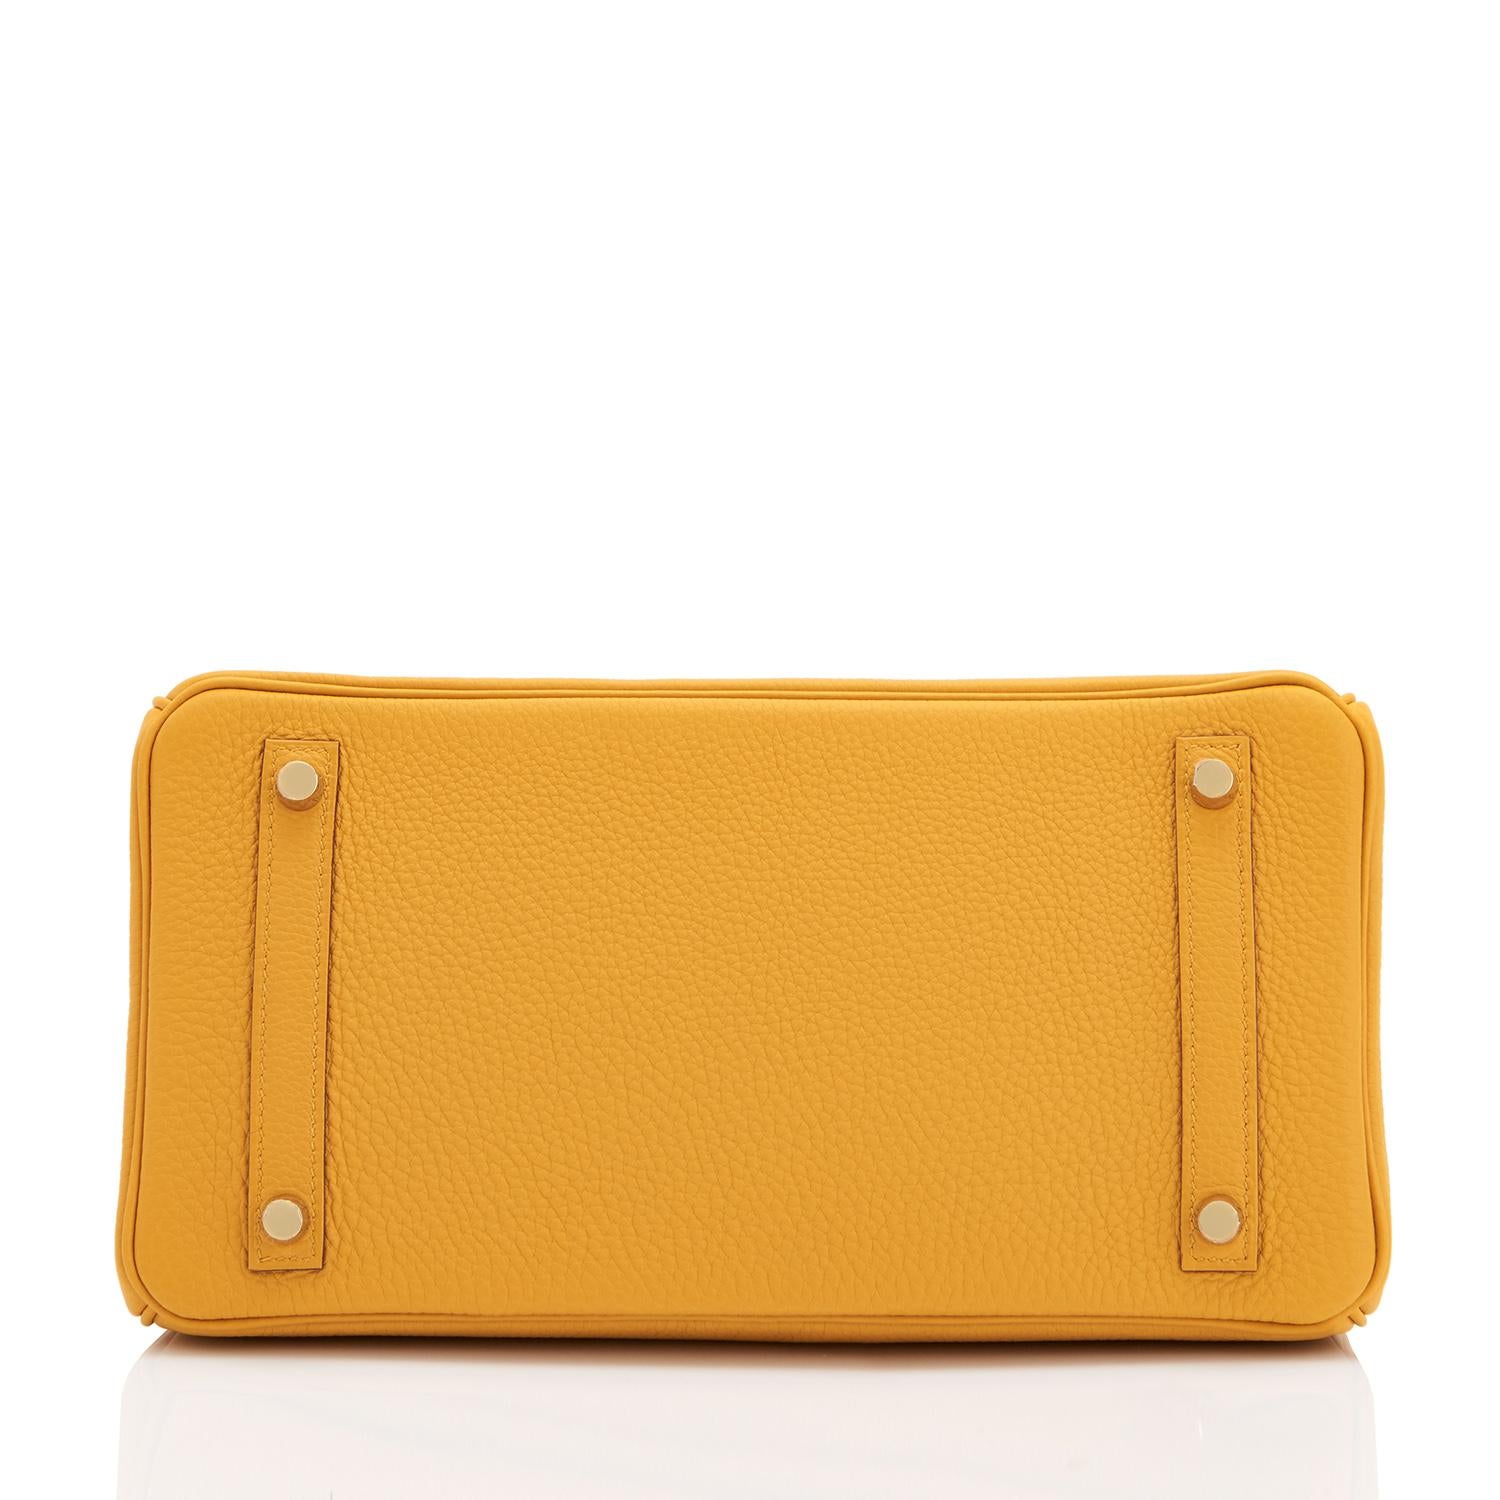 Hermes Birkin 30cm Jaune Ambre Bag Togo Amber Yellow Gold Hardware  1